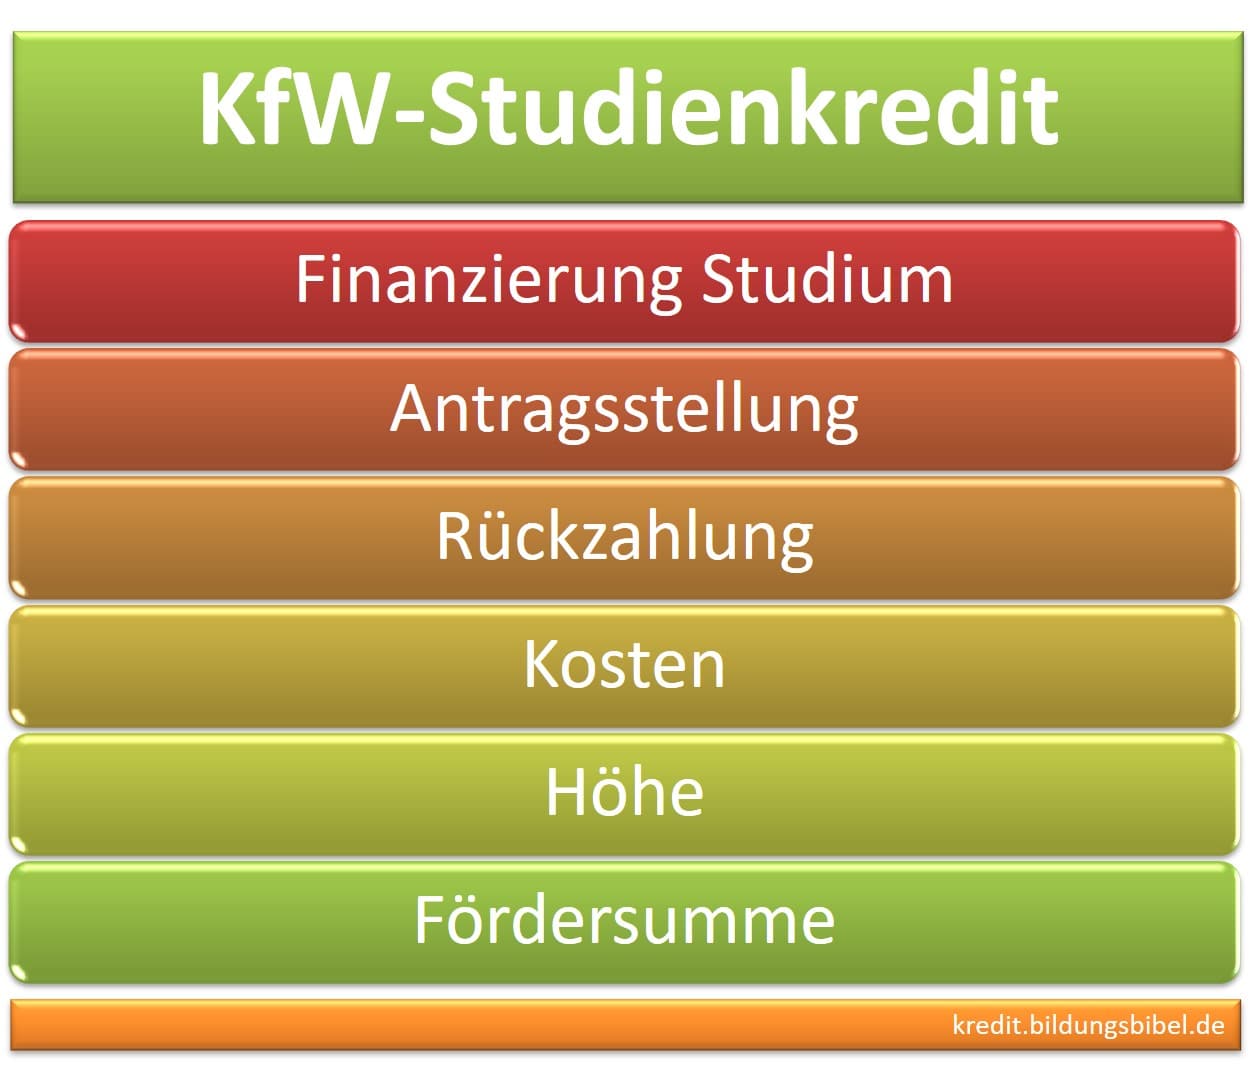 KfW-Studienkredit zur Finanzierung Studium: Antragstellung, Rückzahlung, Antragsteller, Kosten, Höhe, Fördersumme.